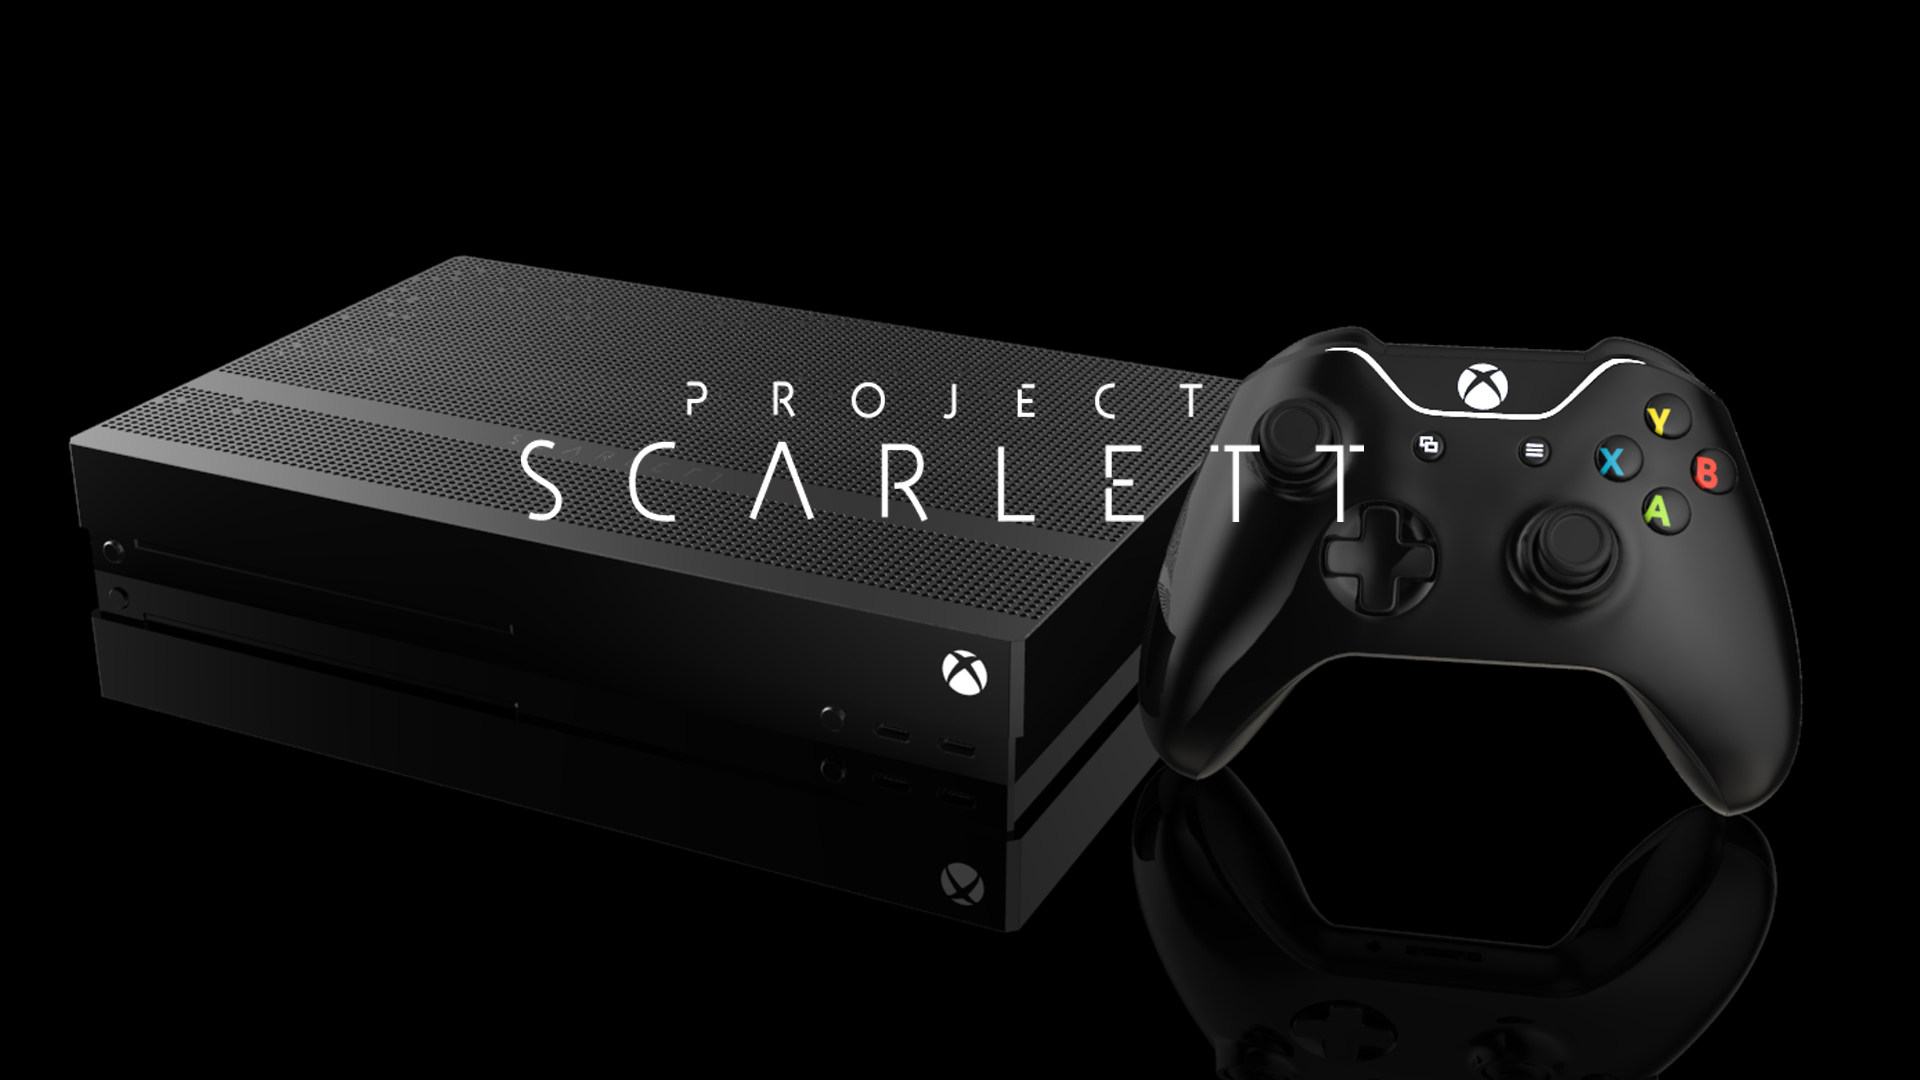 xbox project scarlett price